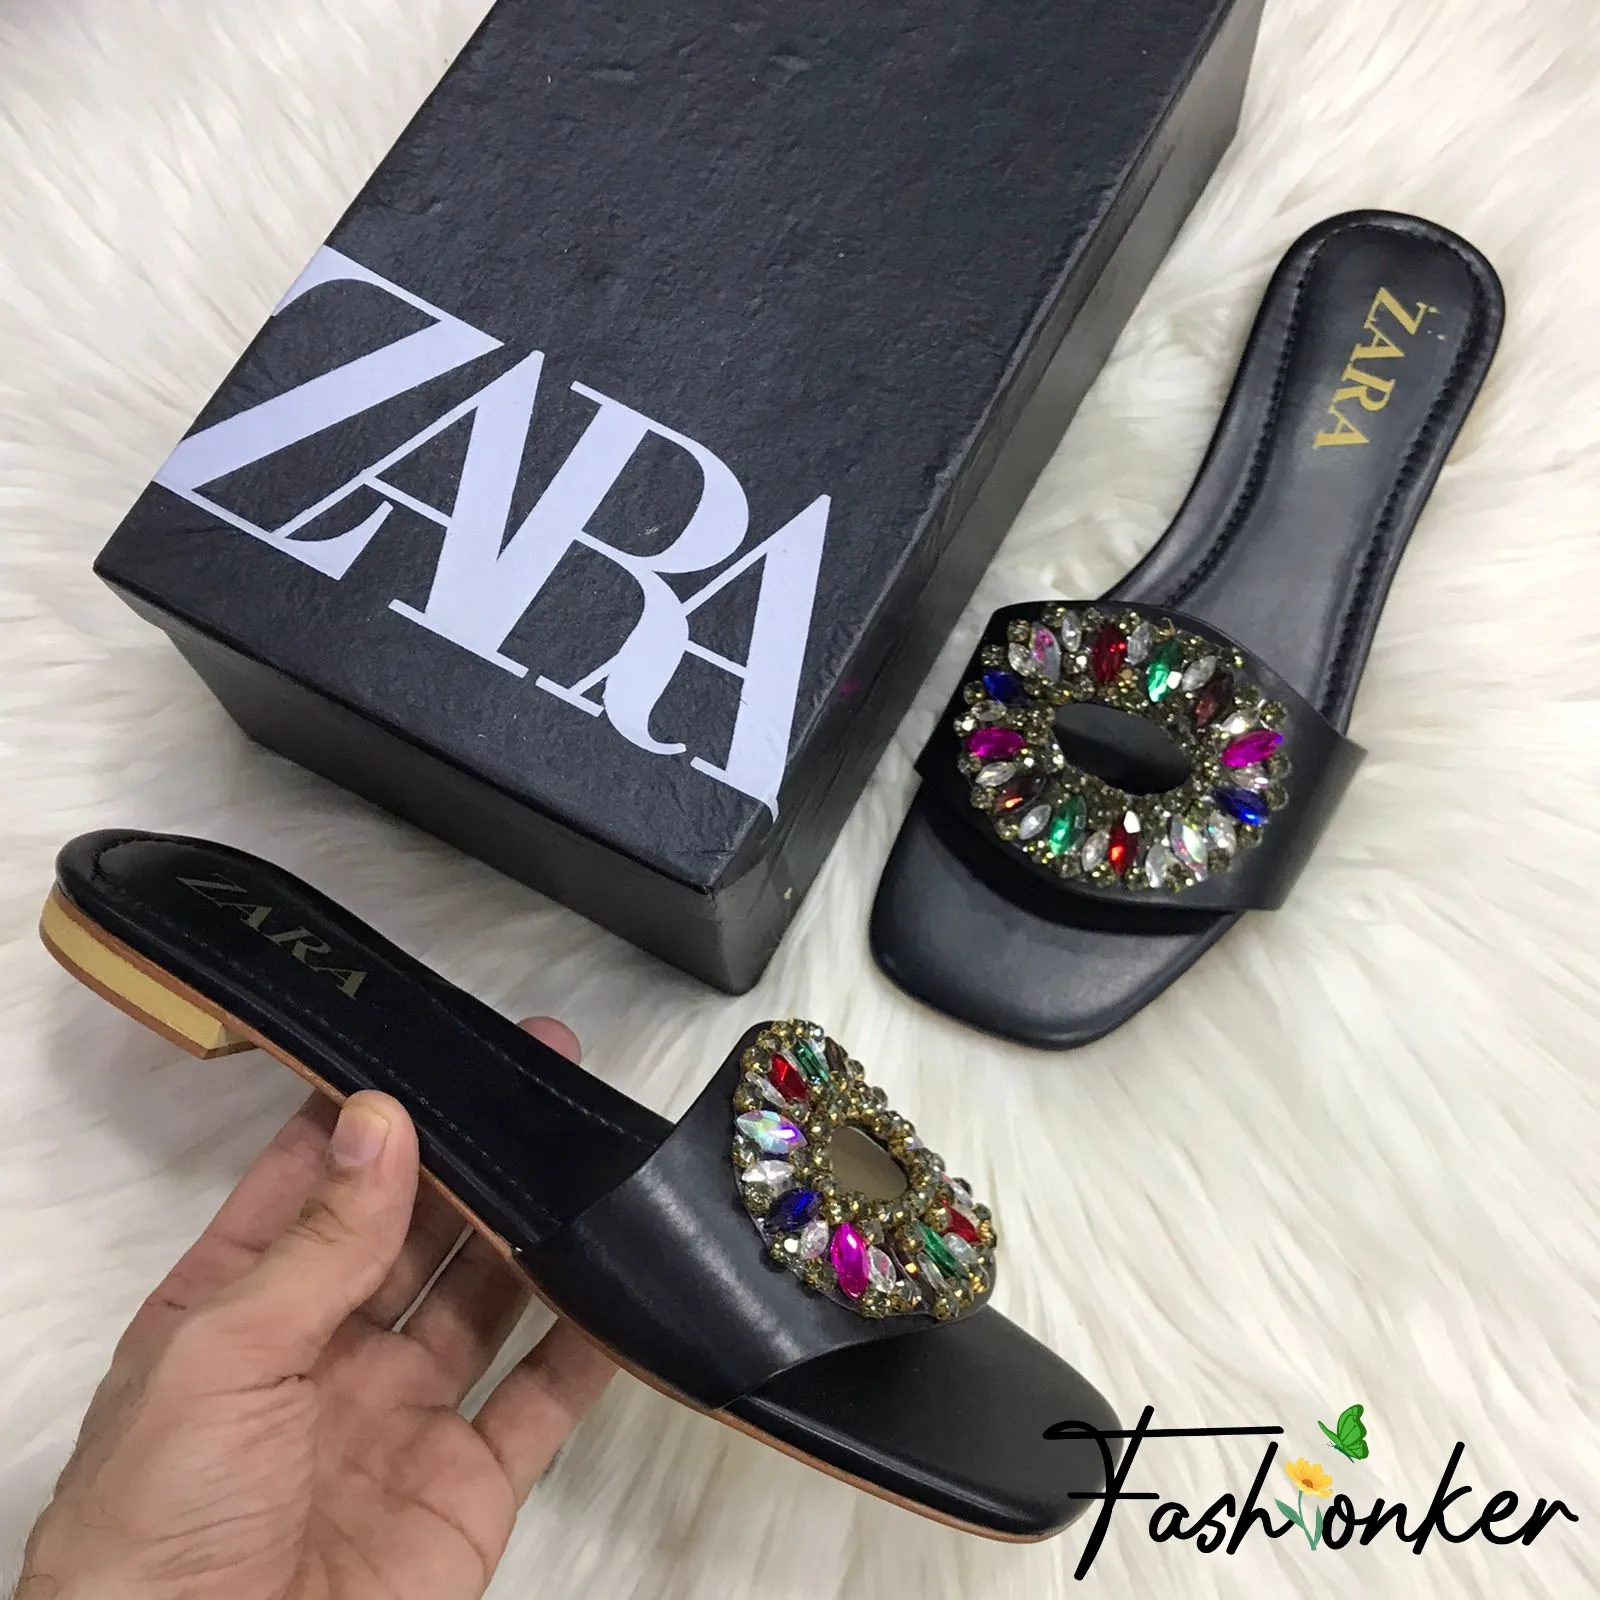 Zara Embellished Stone Slippers